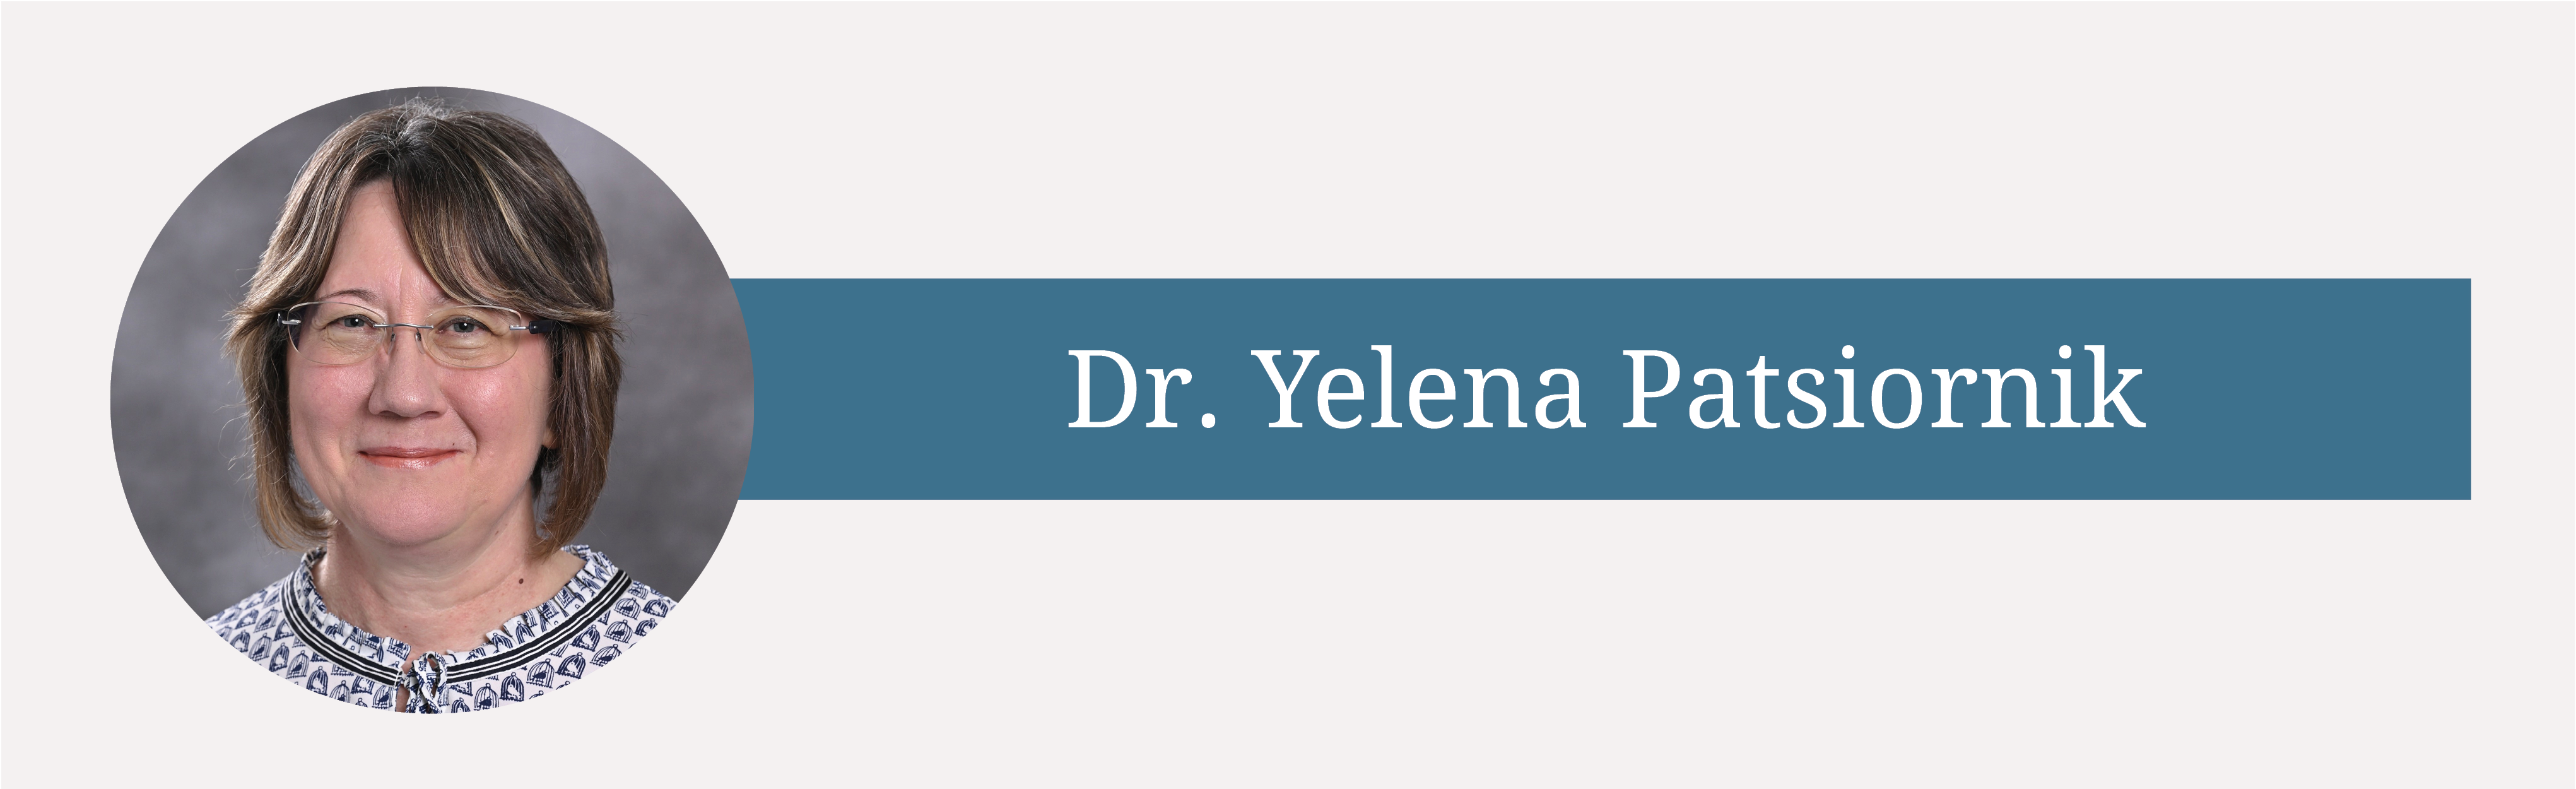 White Plains Hospital Welcomes Medical Oncologist/Hematologist Dr. Yelena Patsiornik